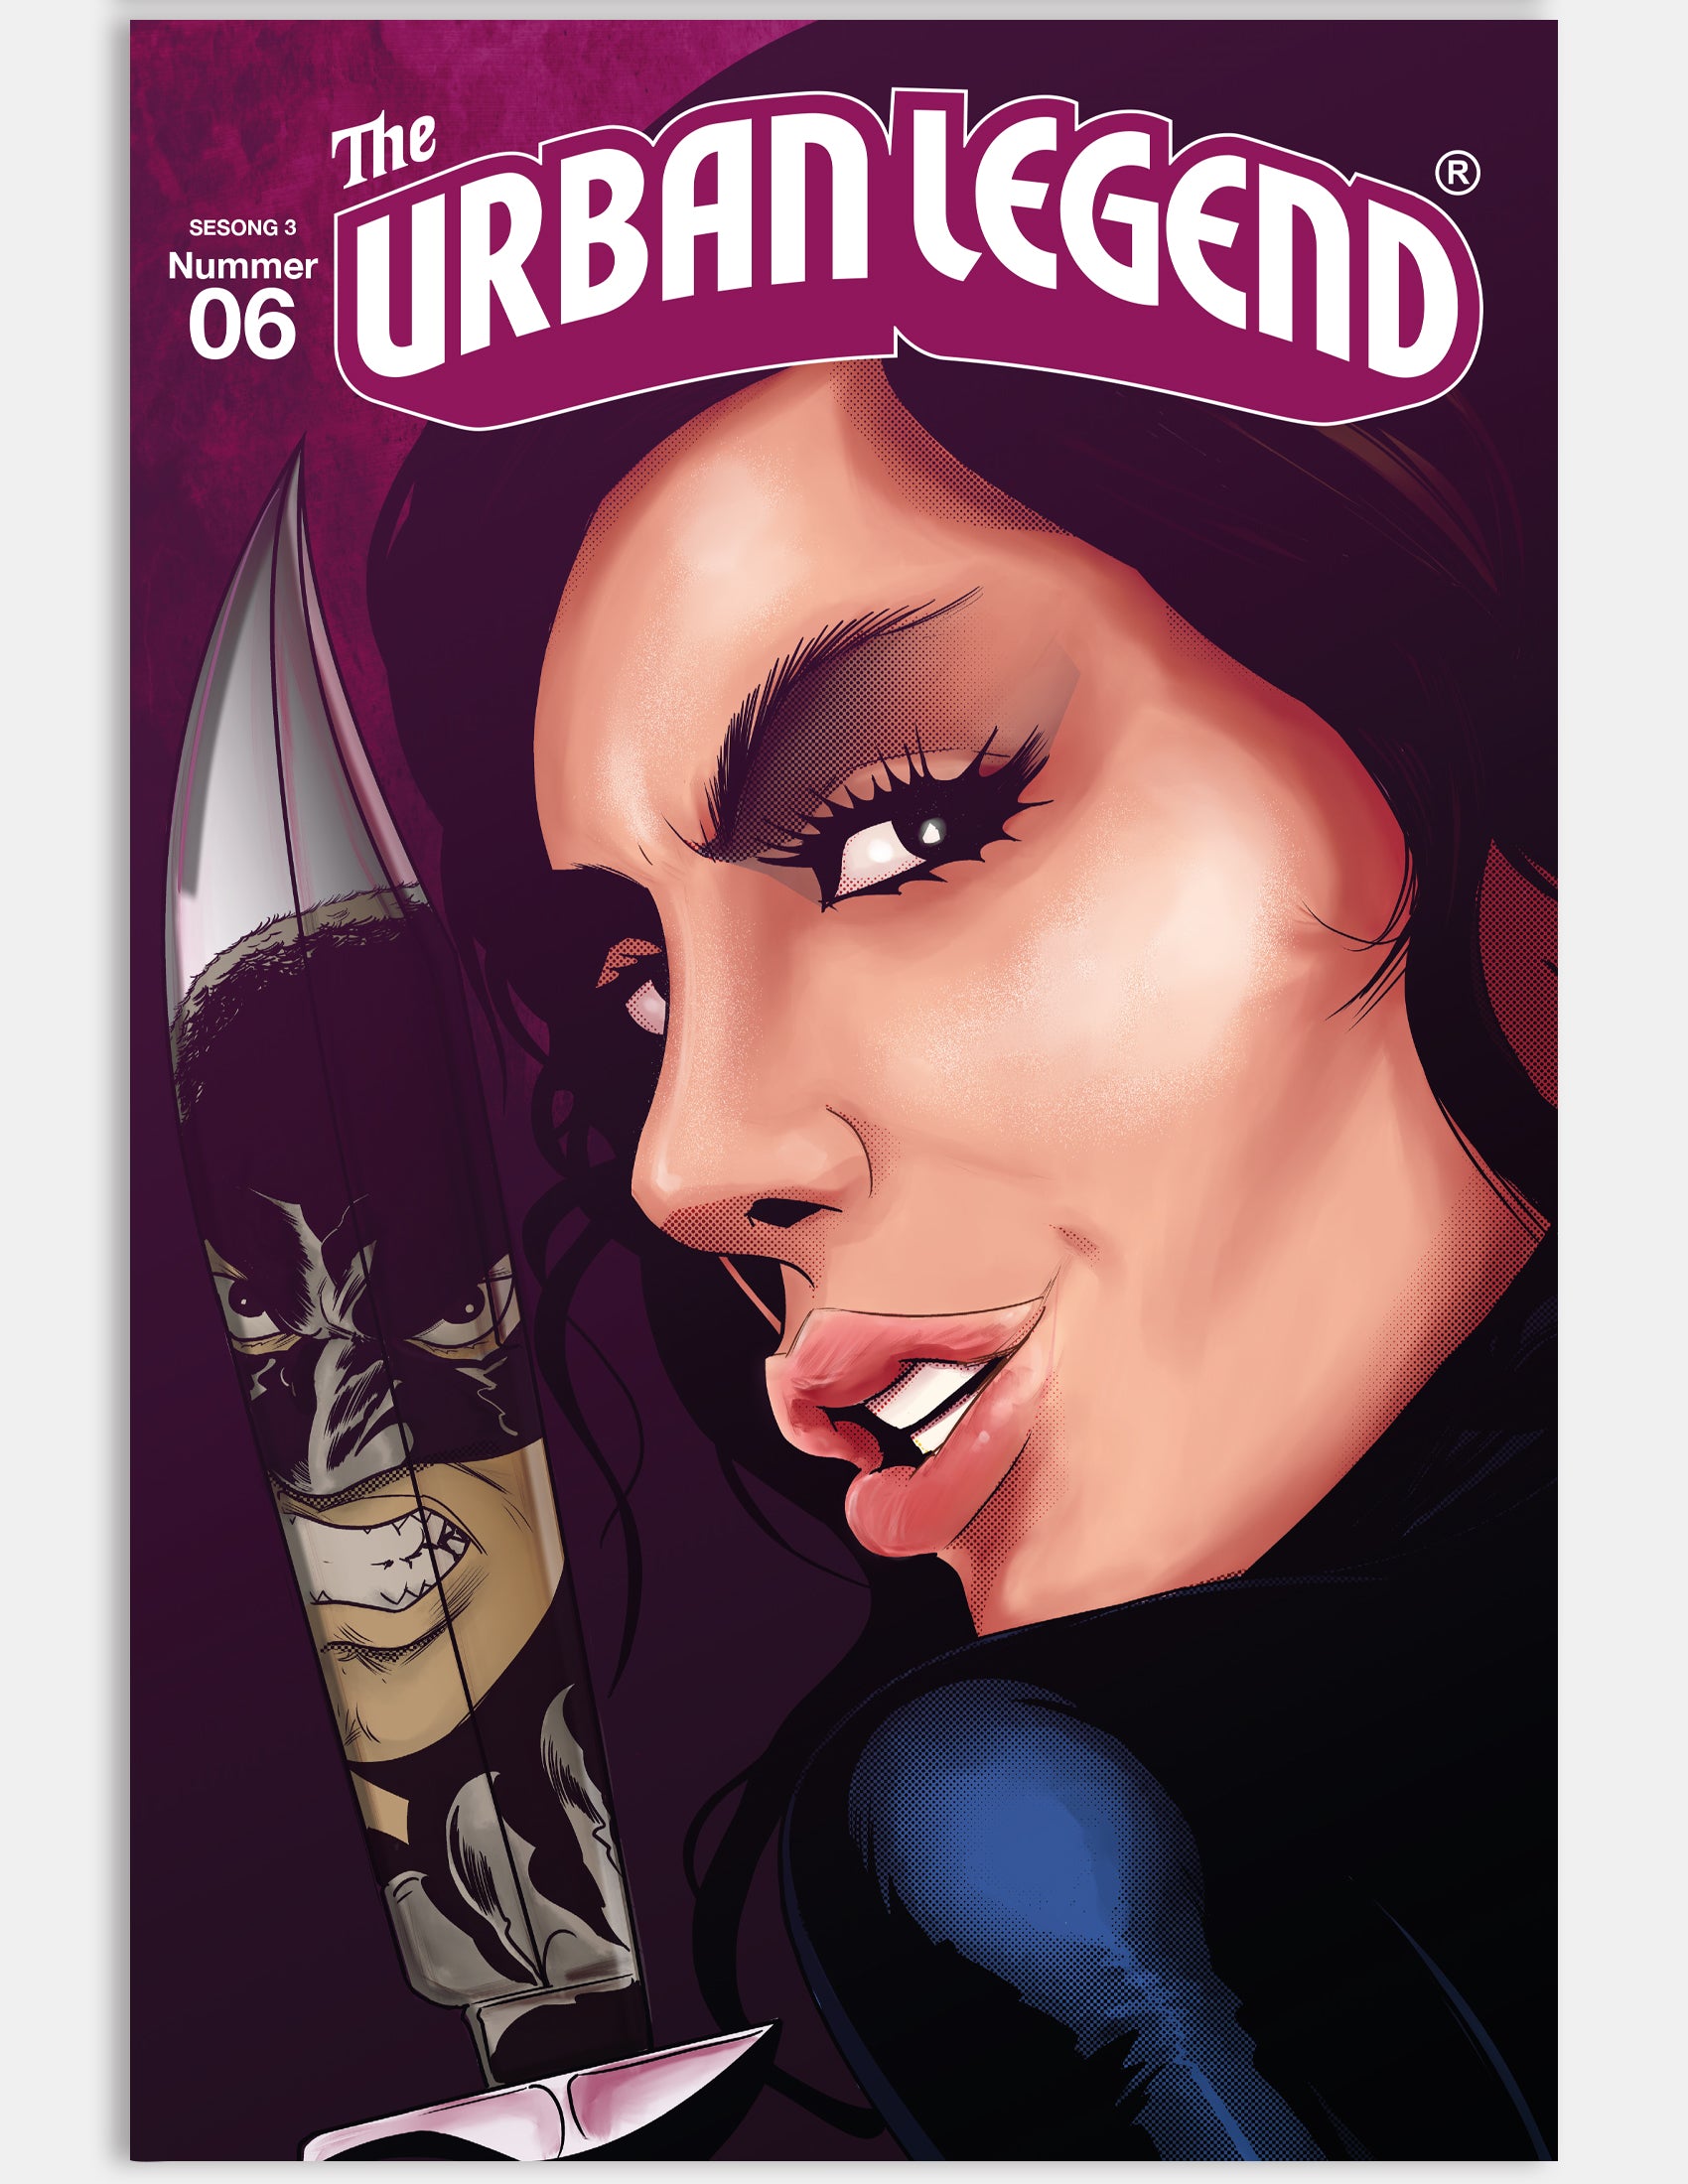 The Urban Legend - Rage (Issue 6 - Season 3)